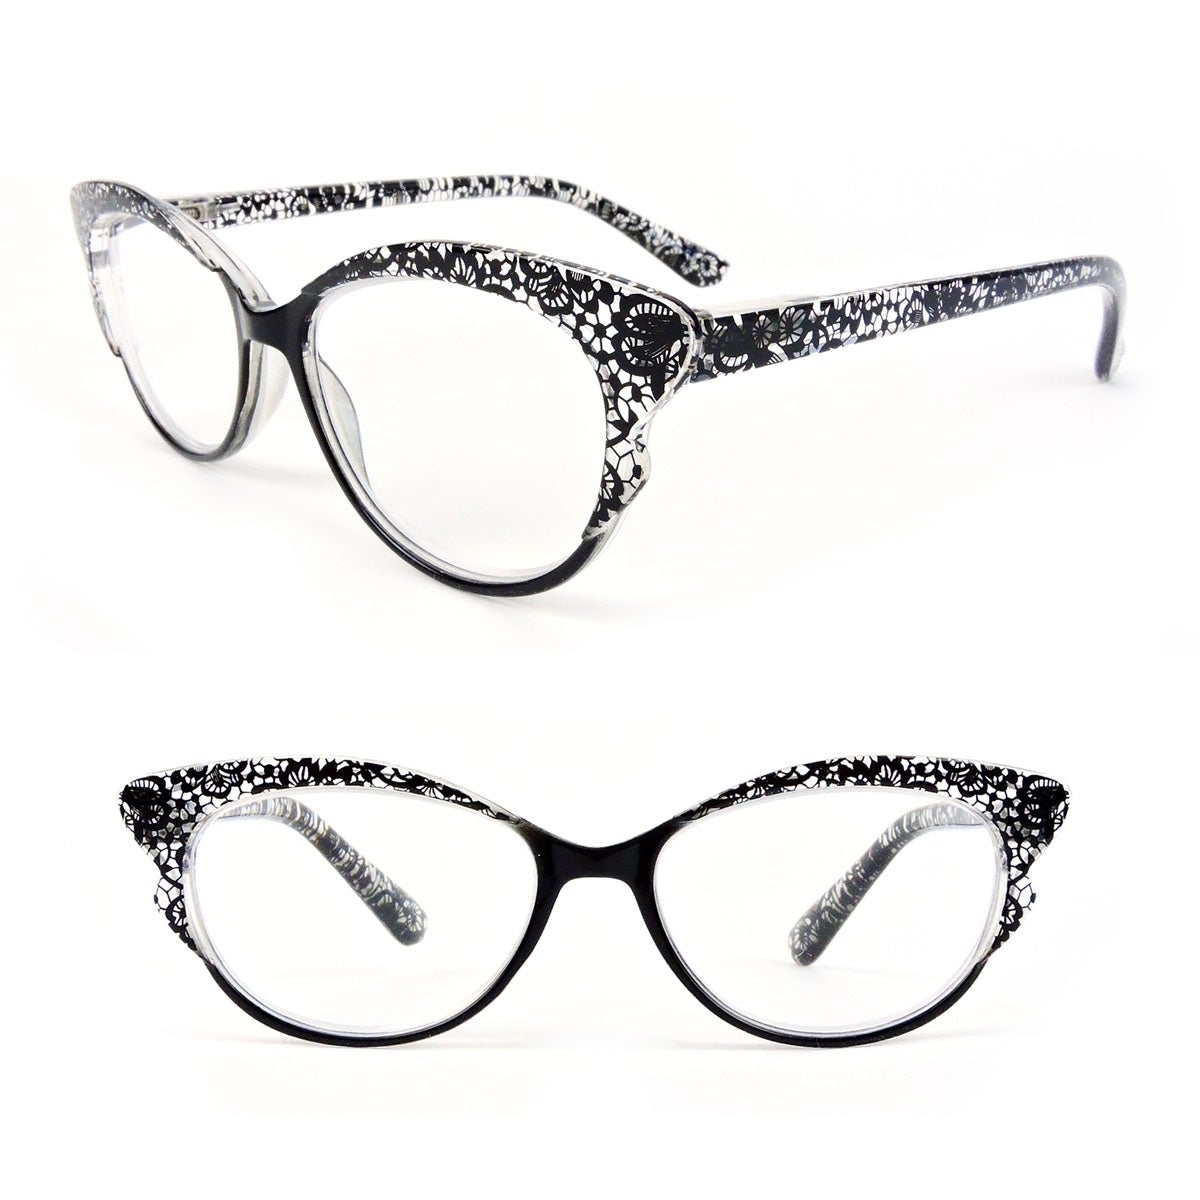 Cat Eye Frame Spring Hinges Fashion Women's Reading Glasses - Beige, +2.00